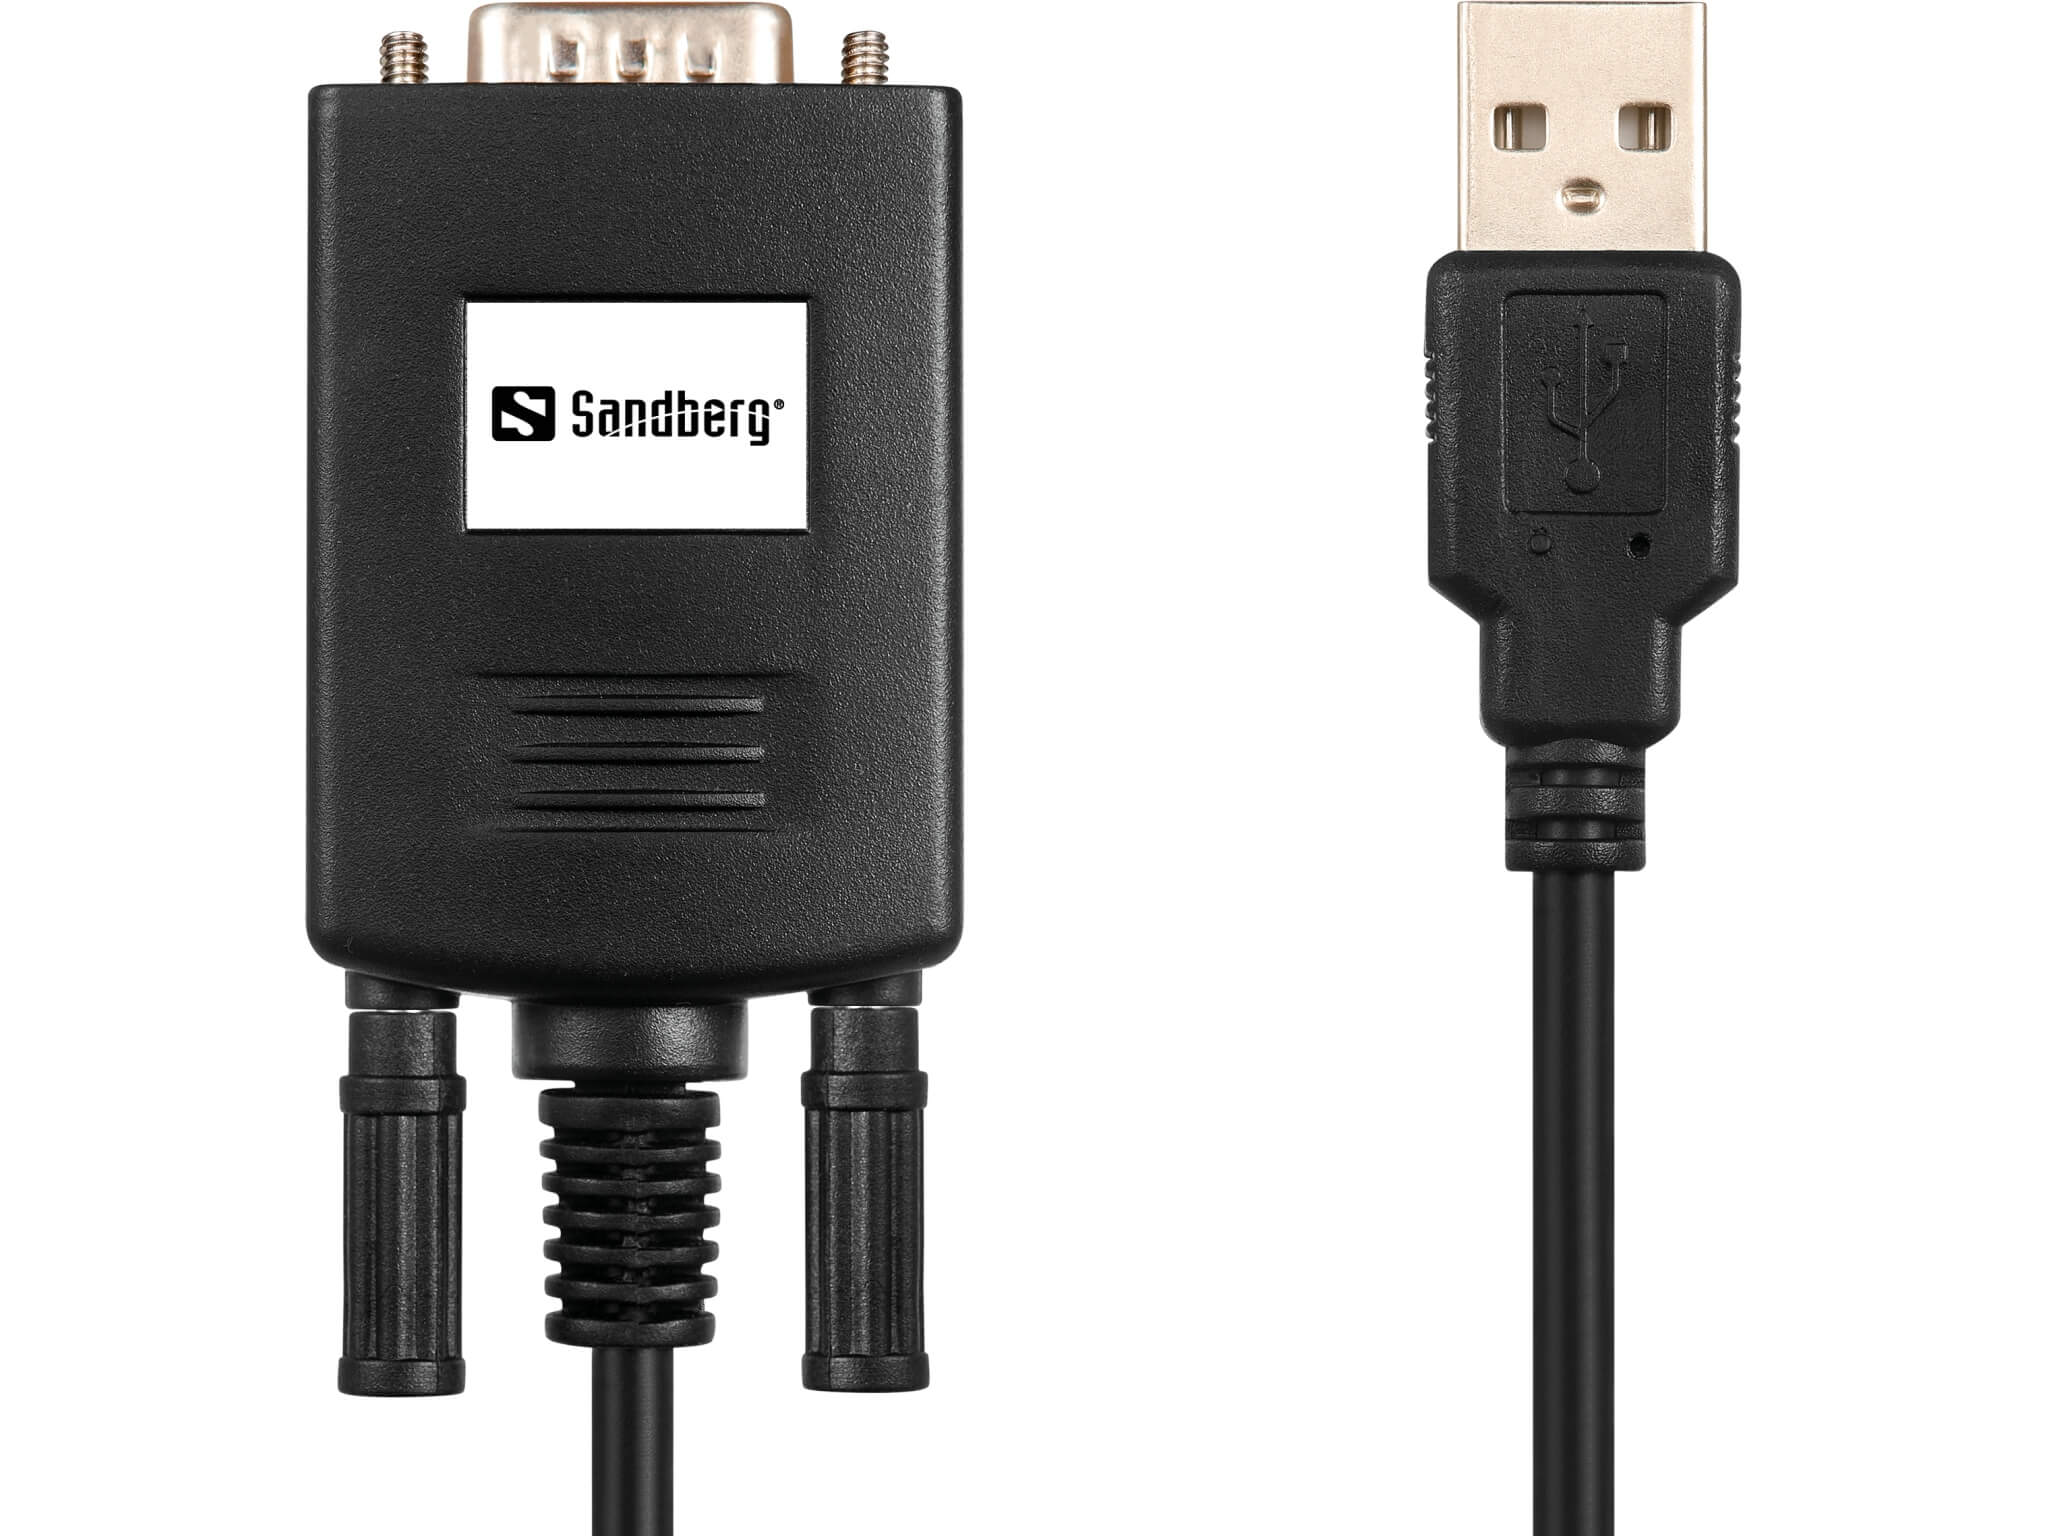 Sandberg USB til Serielport (COM) 9-pin